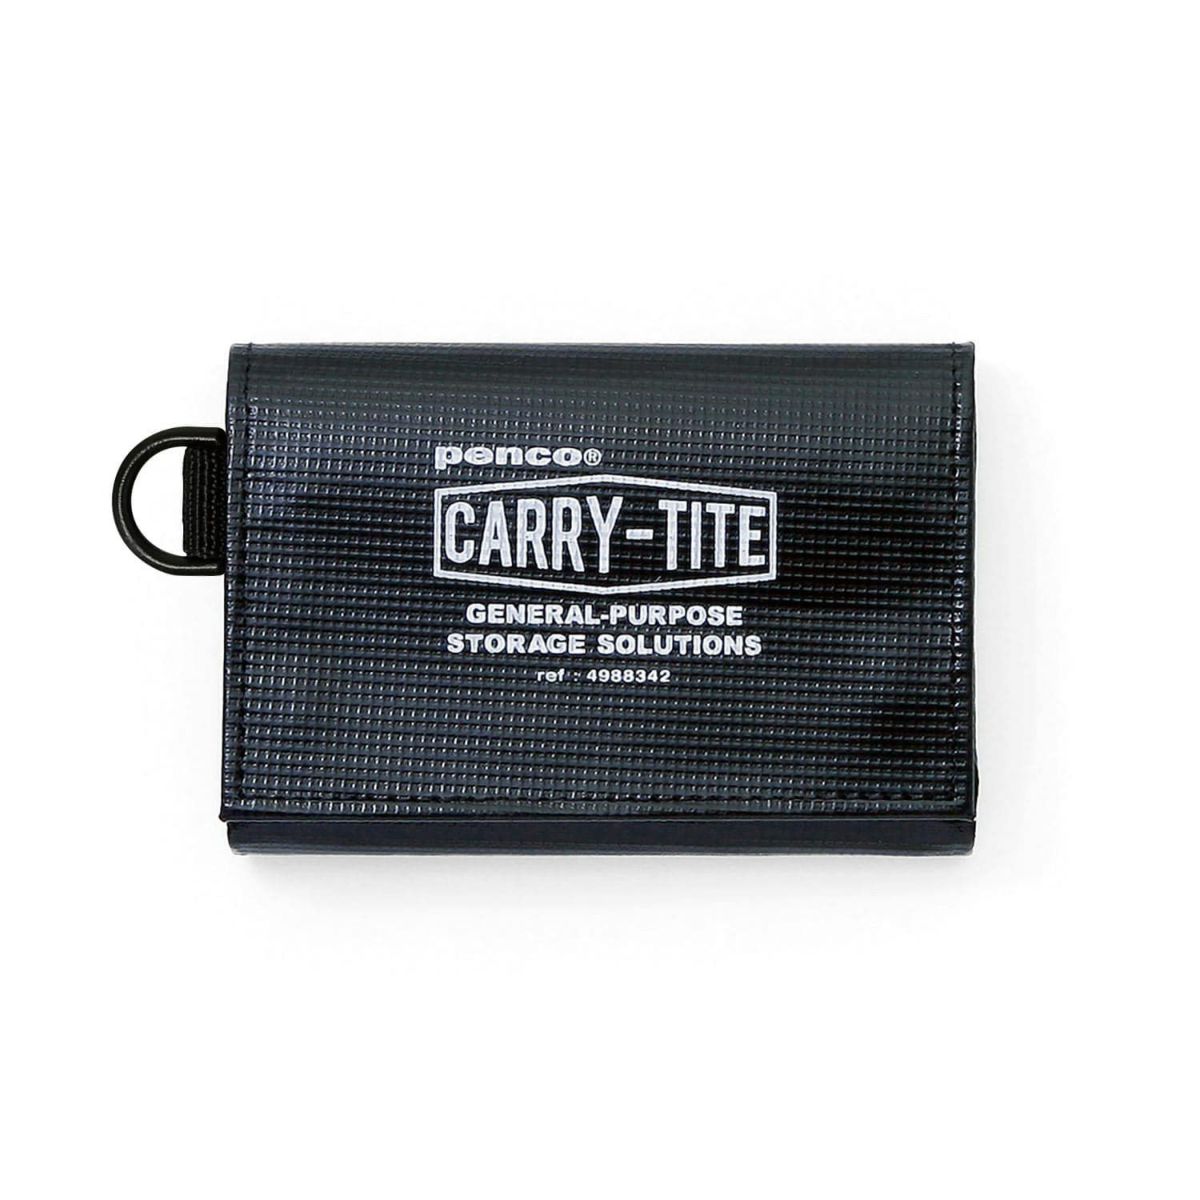 Carry Tite Case 2023 / S  (PENCO)